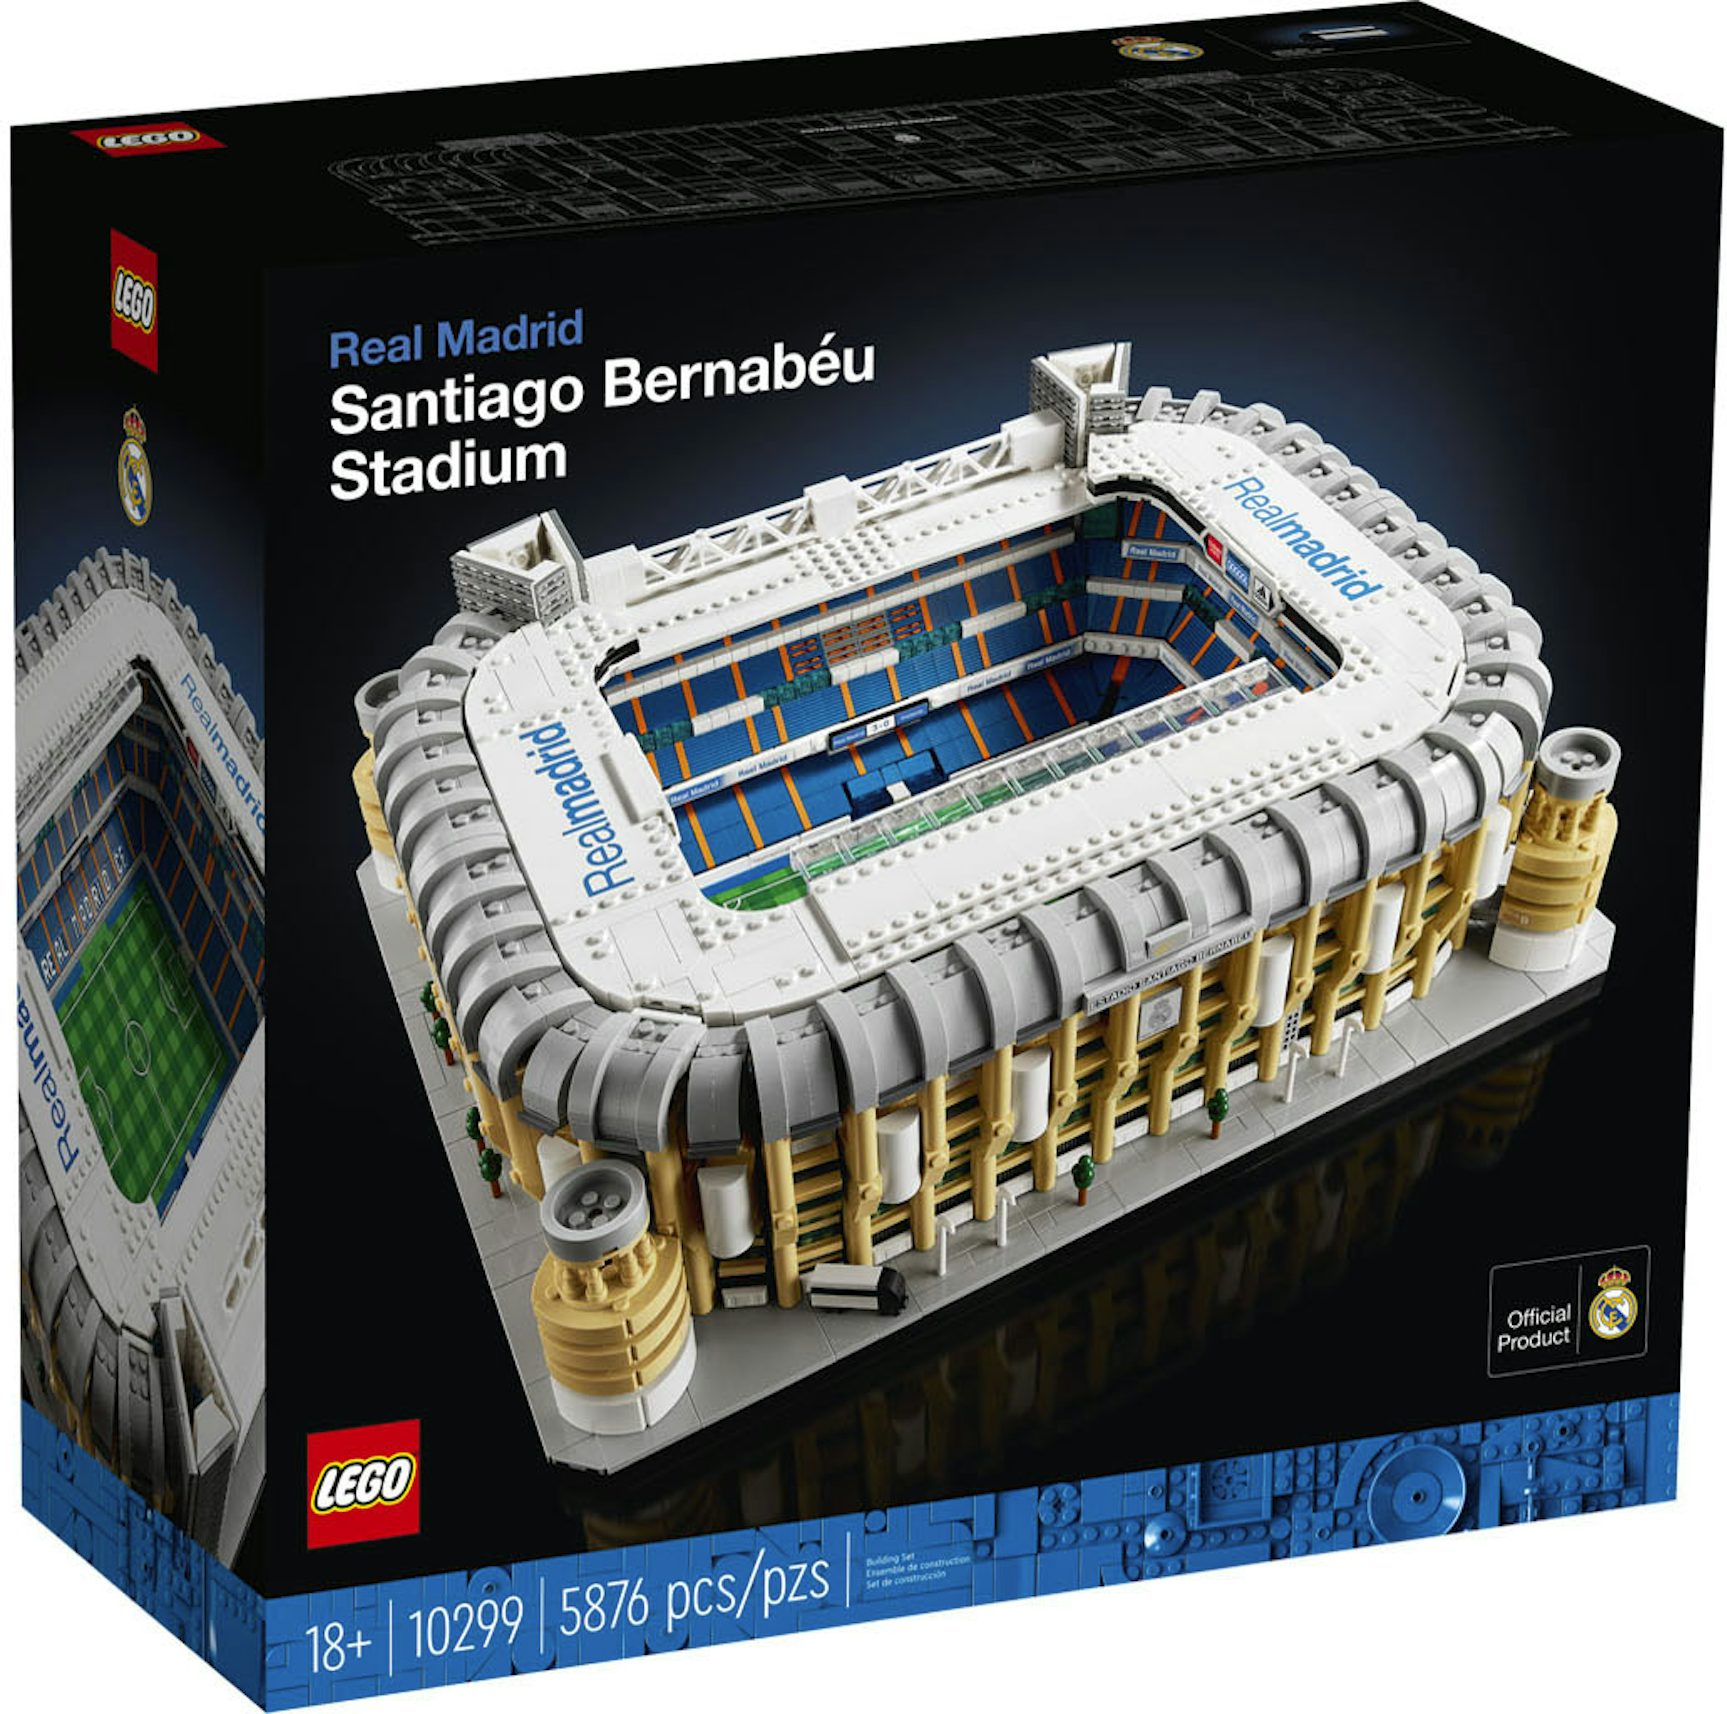 Nouveau LEGO 10299 : Le stade Santiago Bernabéu du Real Madrid